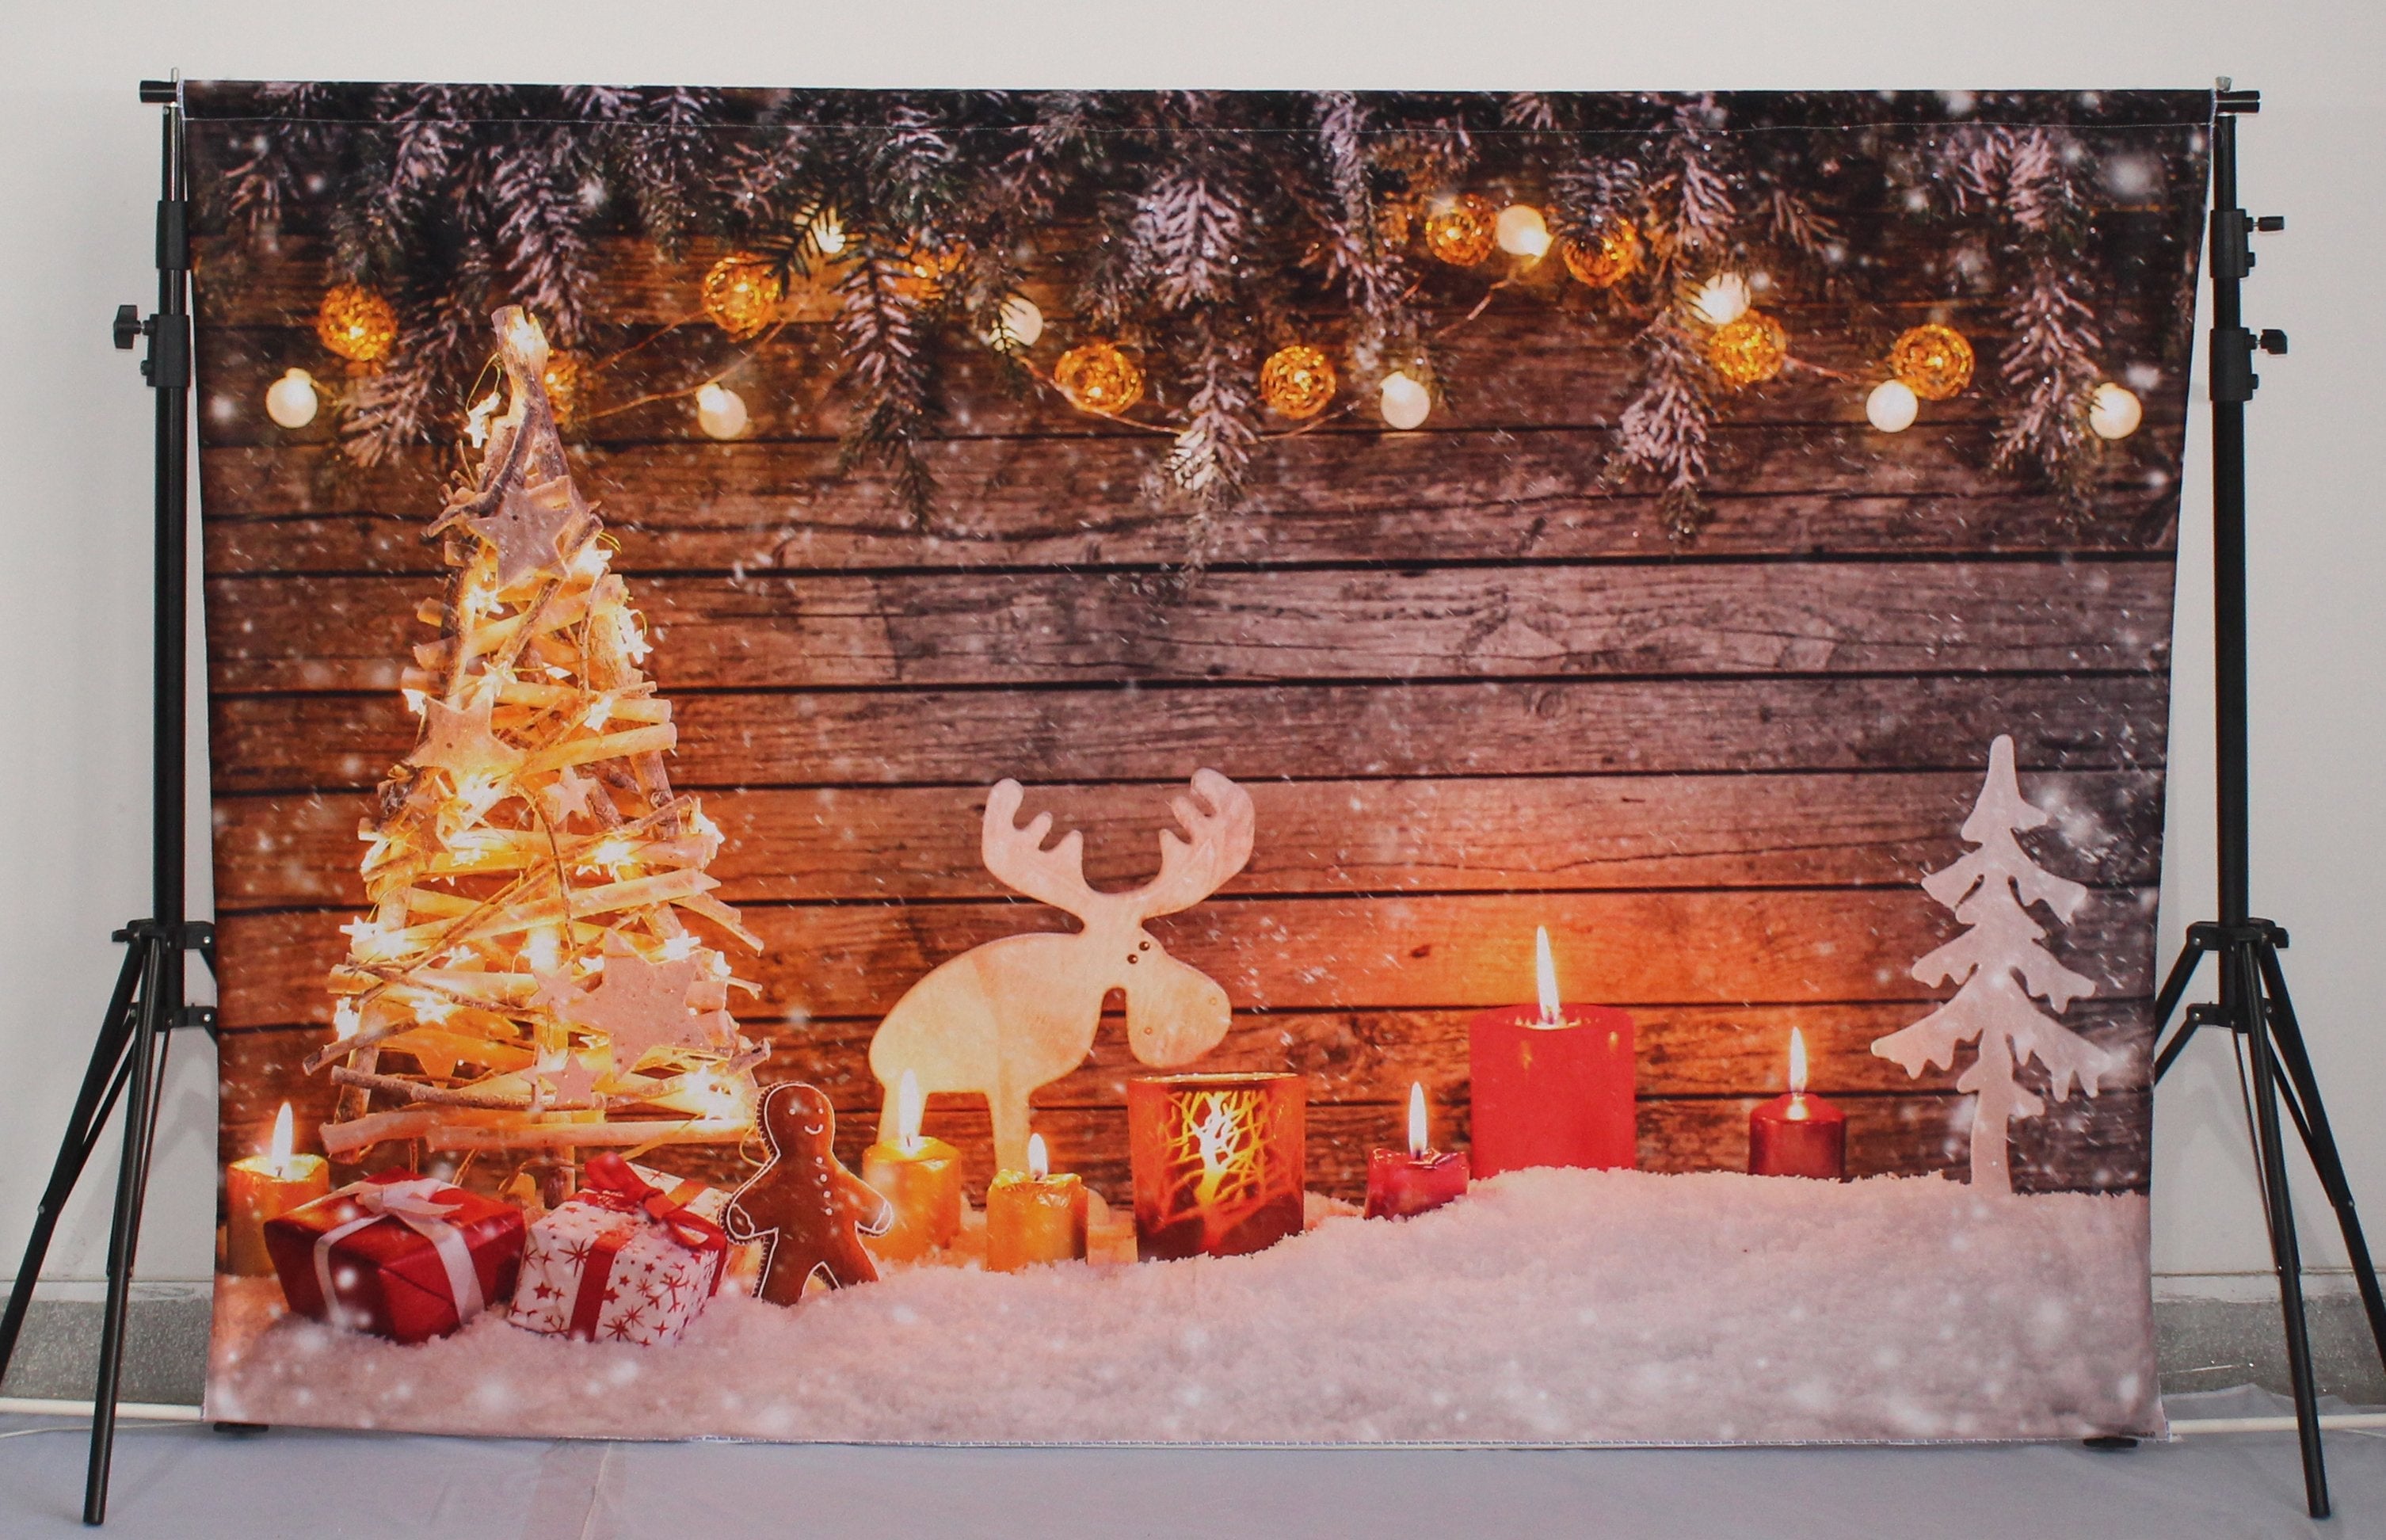 Katebackdrop：Kate Christmas Photo Backdrop Snow Wooden Wall For Chlidren Photography